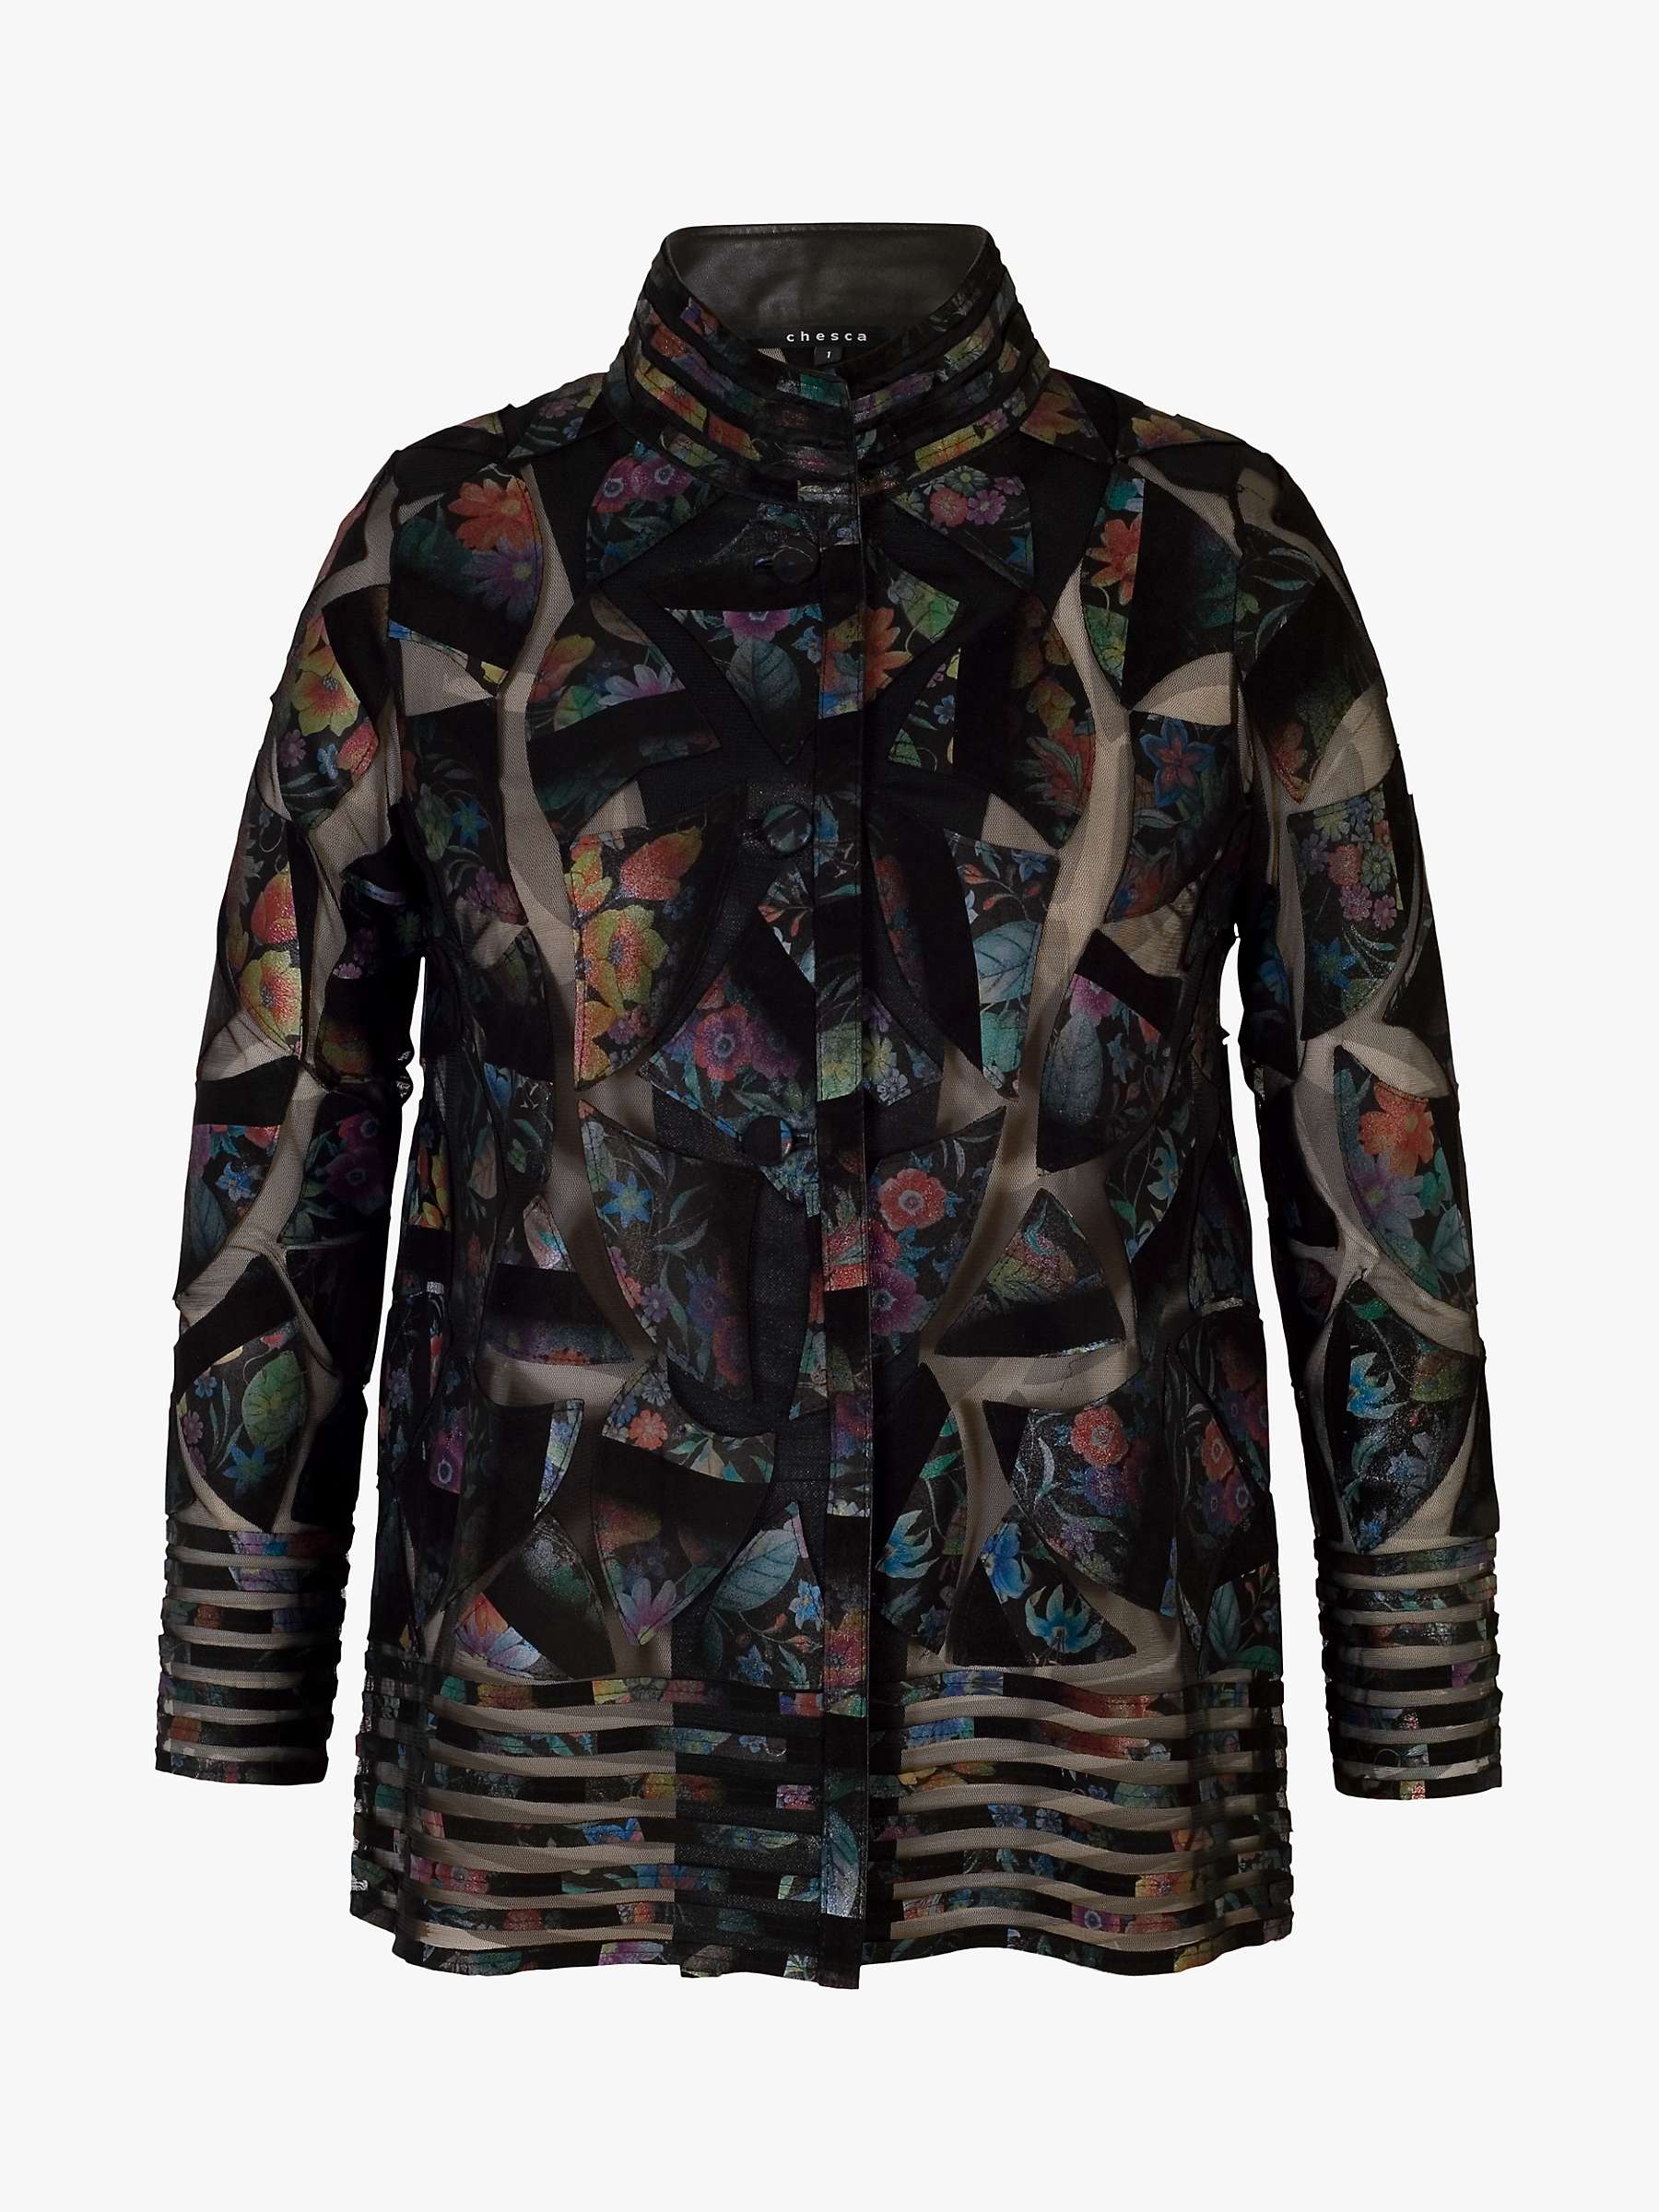 Buy chesca Rainforest Leather Jacket, Black/Multi Online at johnlewis.com